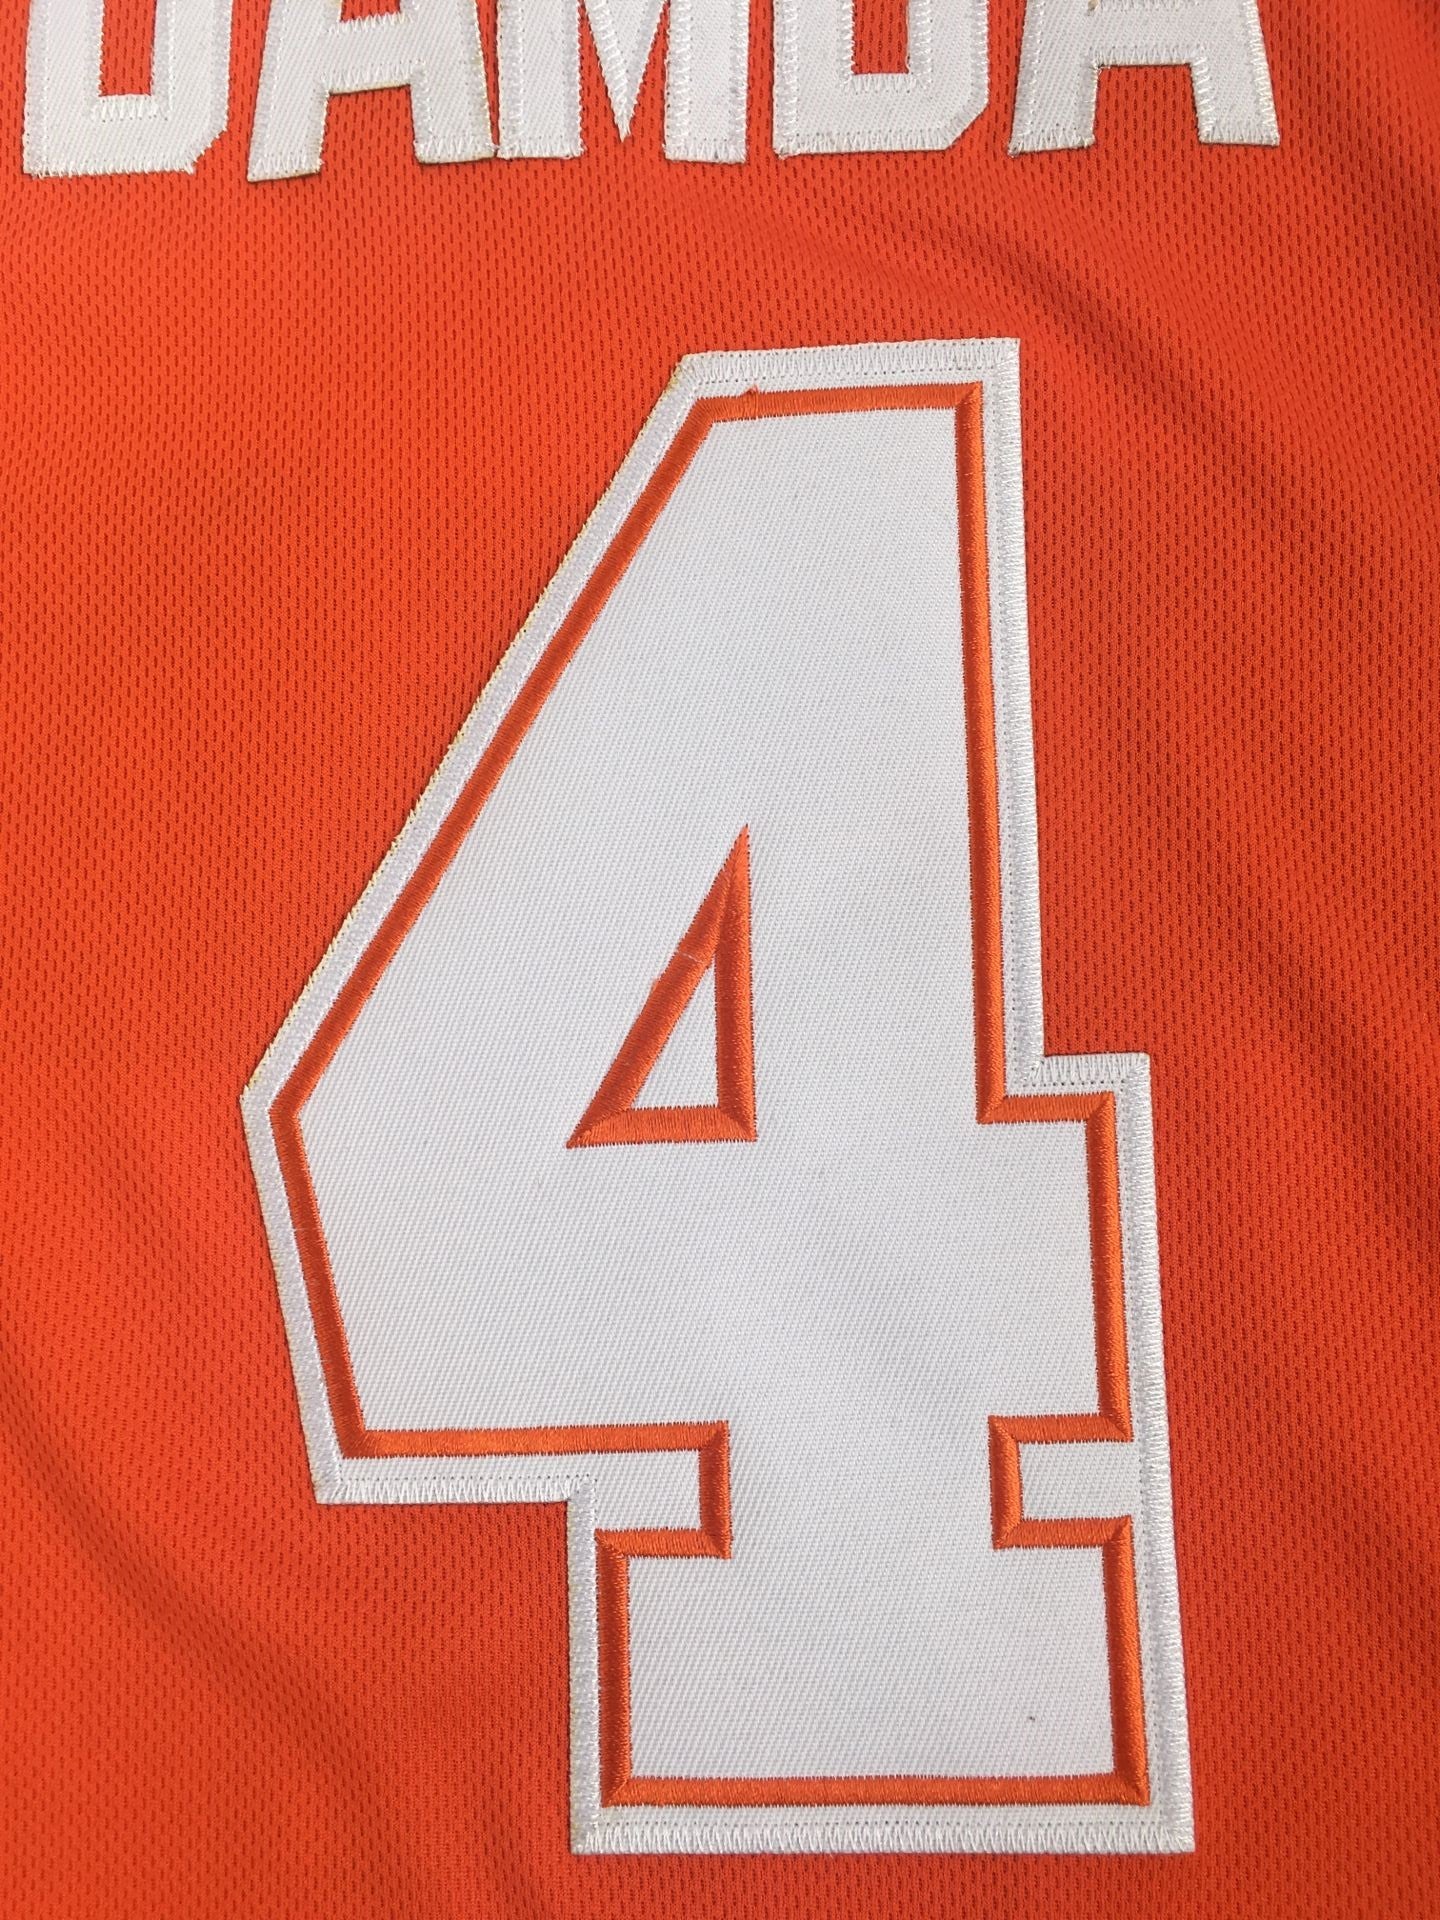 NCAA University of Texas No. 4 Bamba Orange White Embroidered Jersey